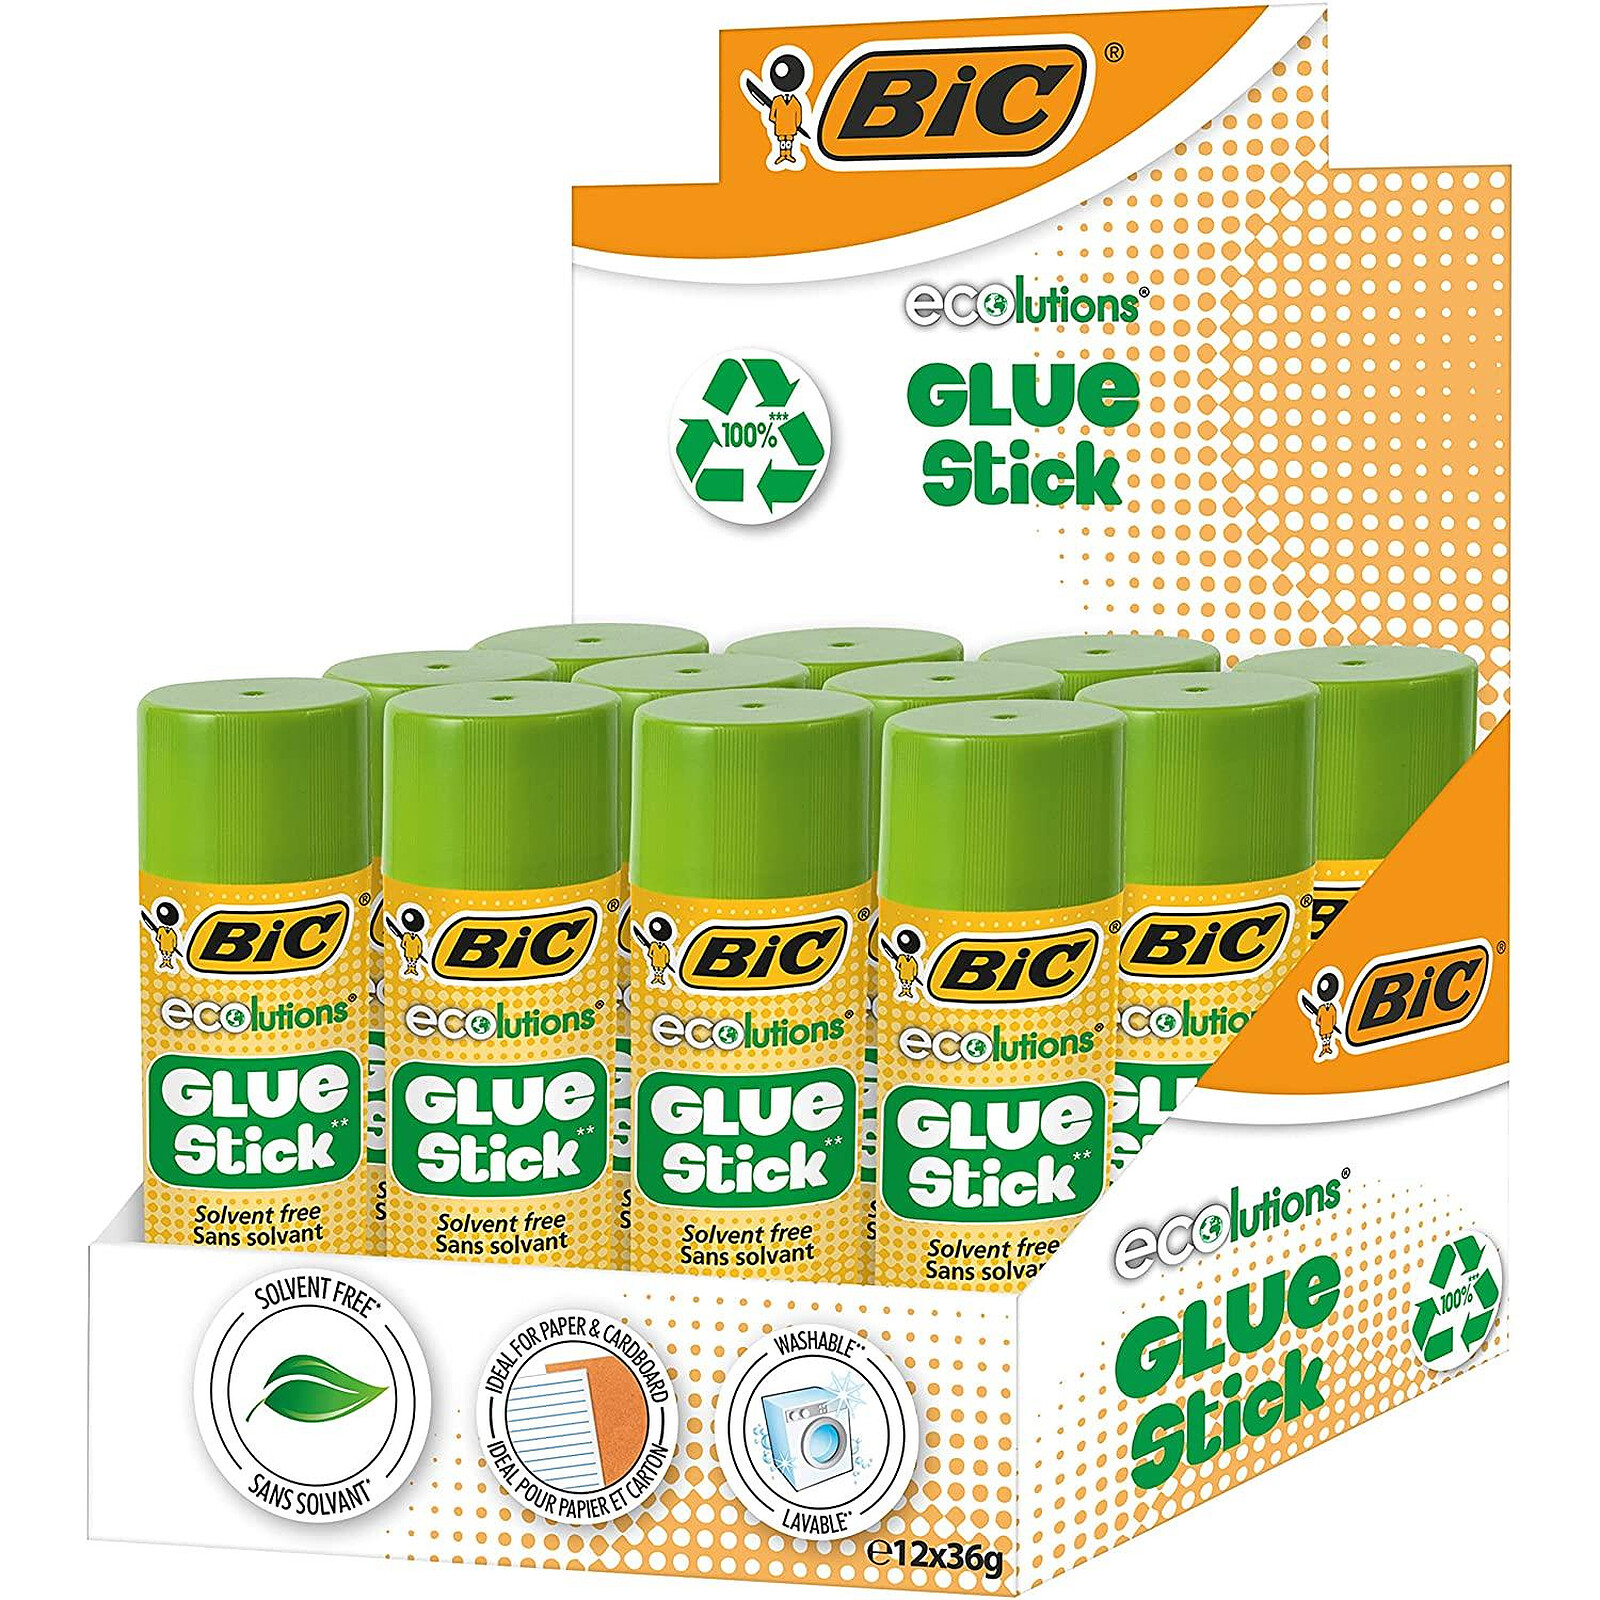 UHU Stic baton de colle 40 g - Ruban adhésif & colle - LDLC